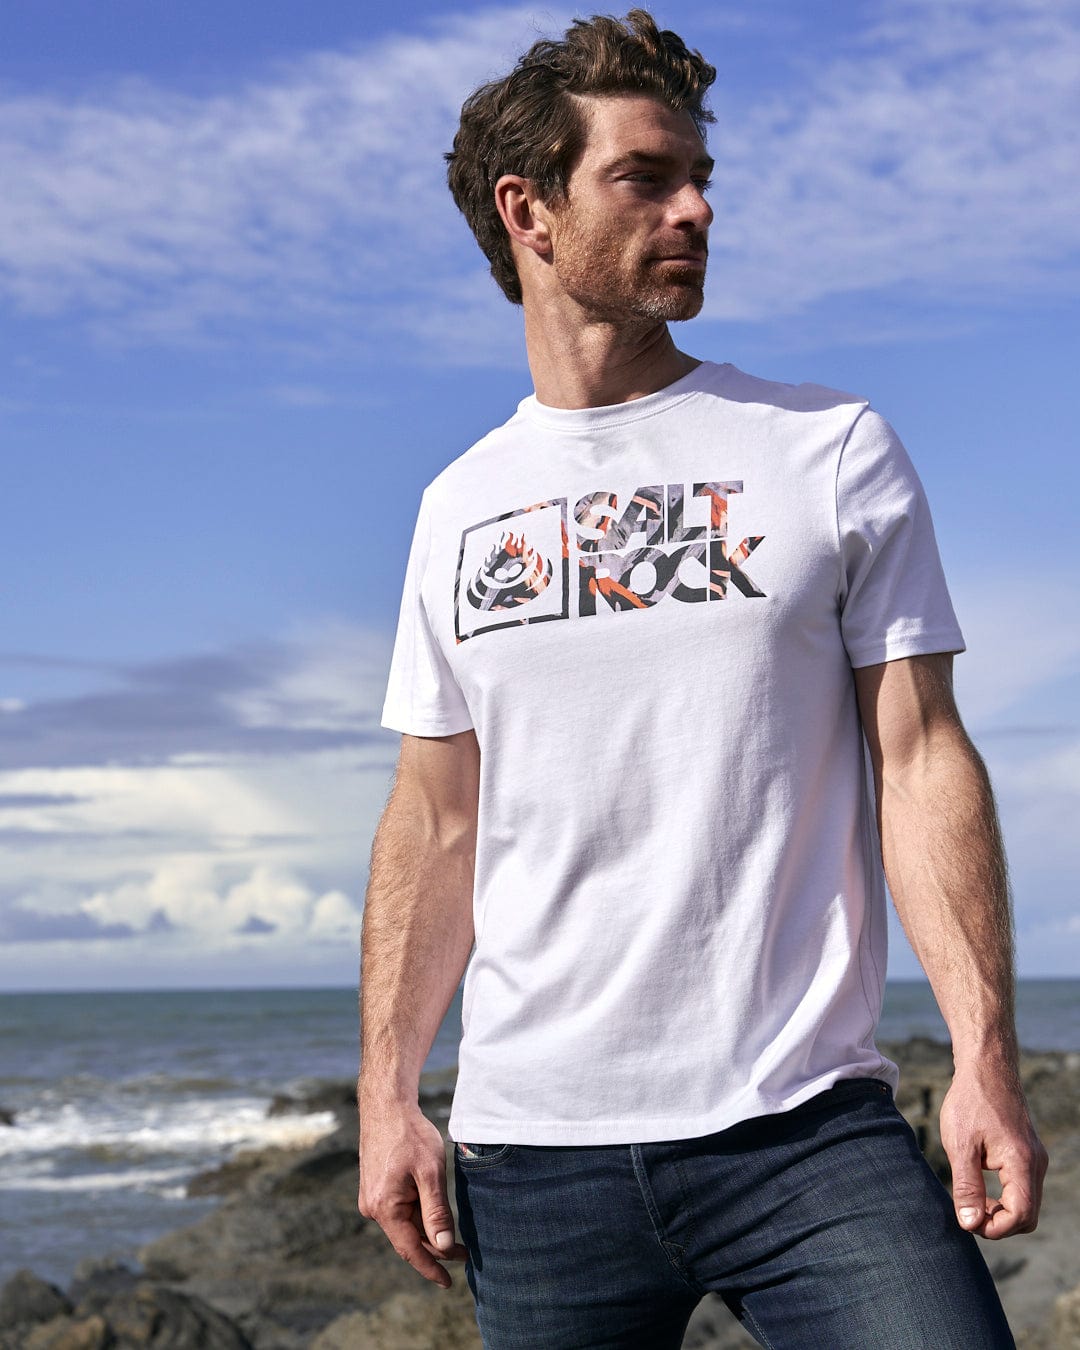 A man wearing a Mountain Logo - Mens Short Sleeve T-Shirt - White, showcasing the Saltrock branding.